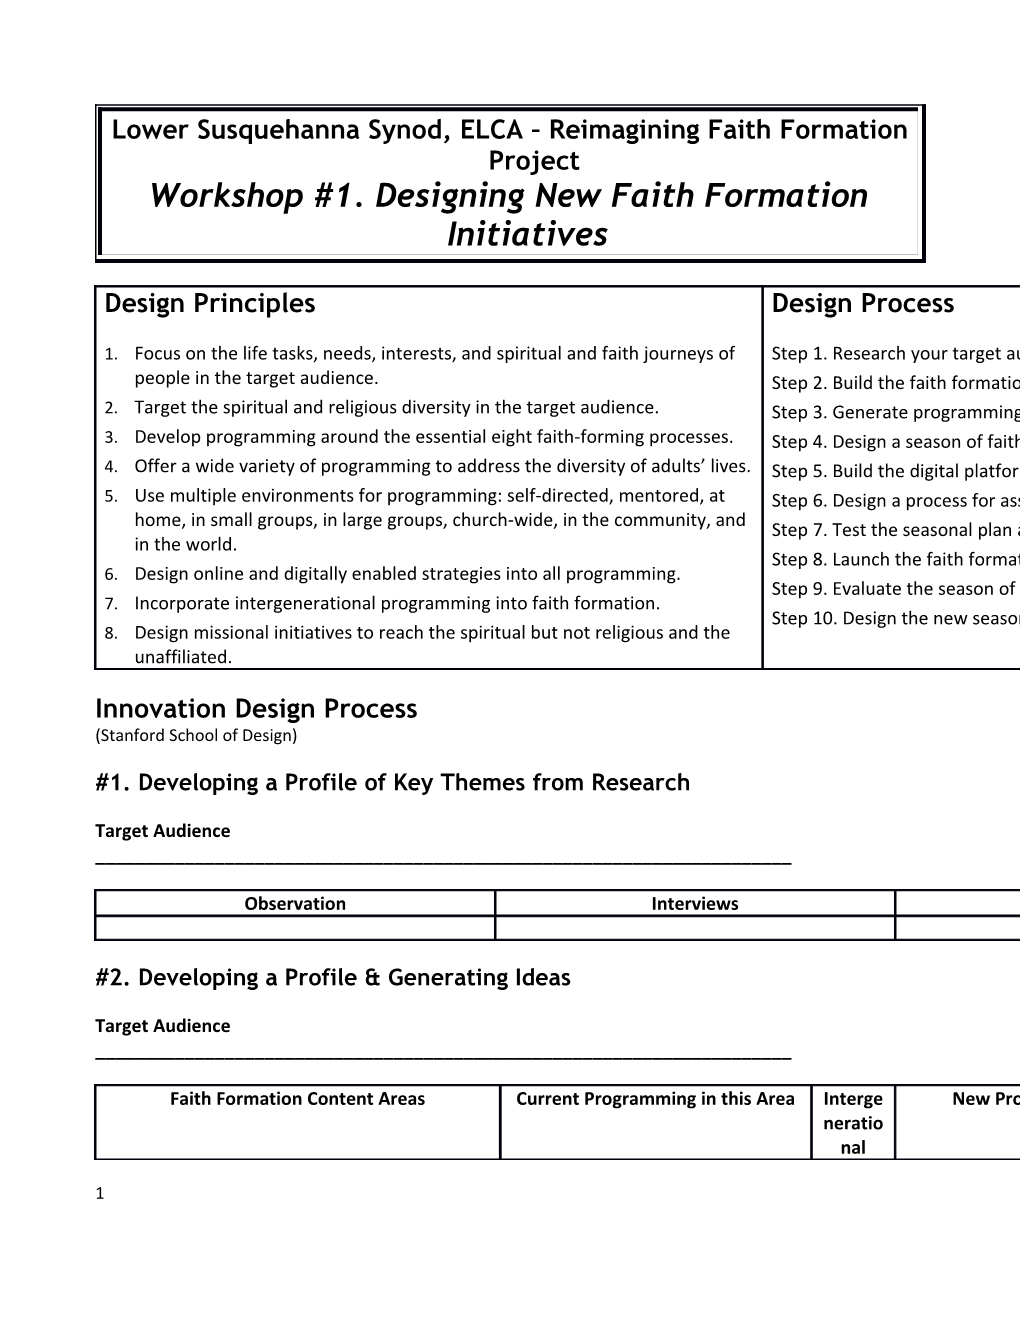 Lower Susquehanna Synod, ELCA Reimagining Faith Formation Project